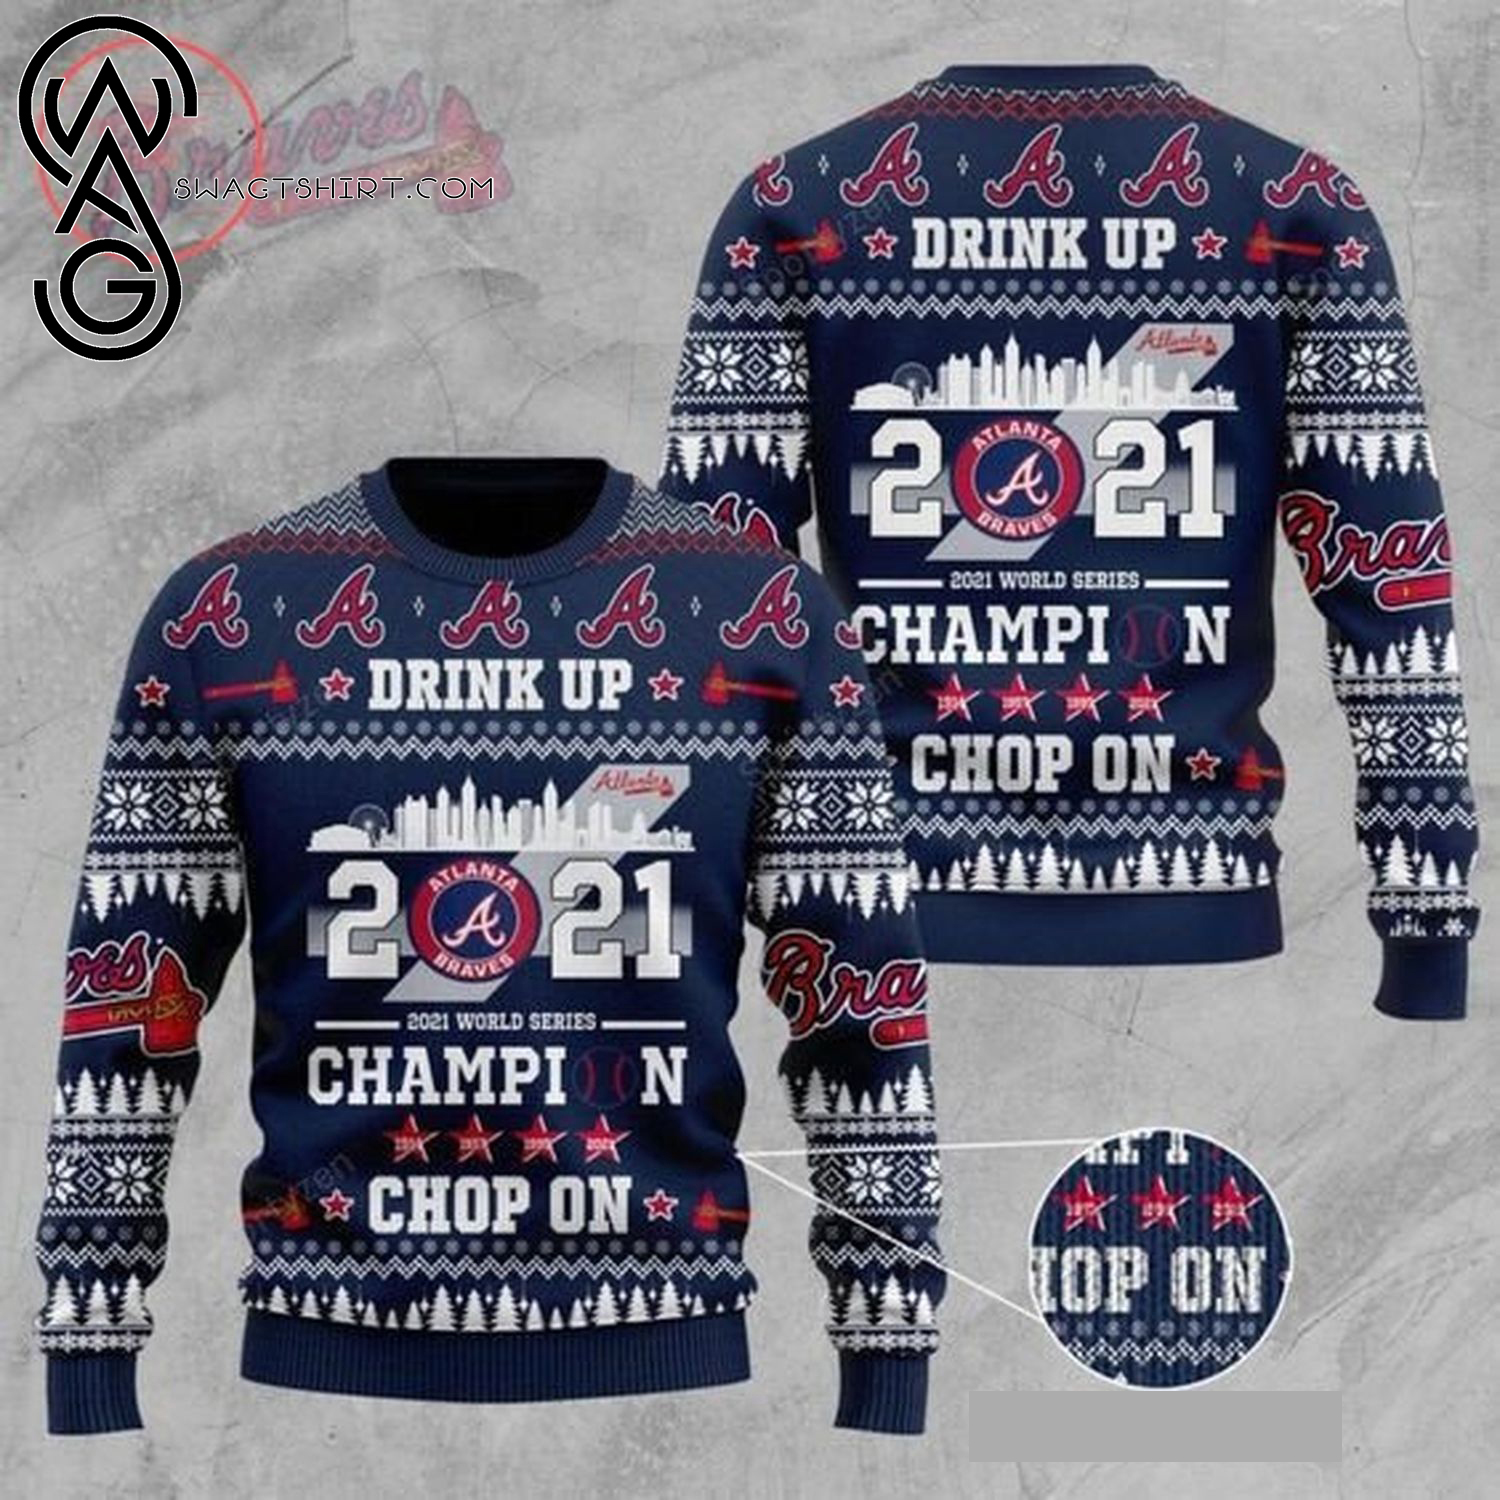 Atlanta Braves Drink Up 2021 Champion Chop On Full Print Ugly Christmas Sweater